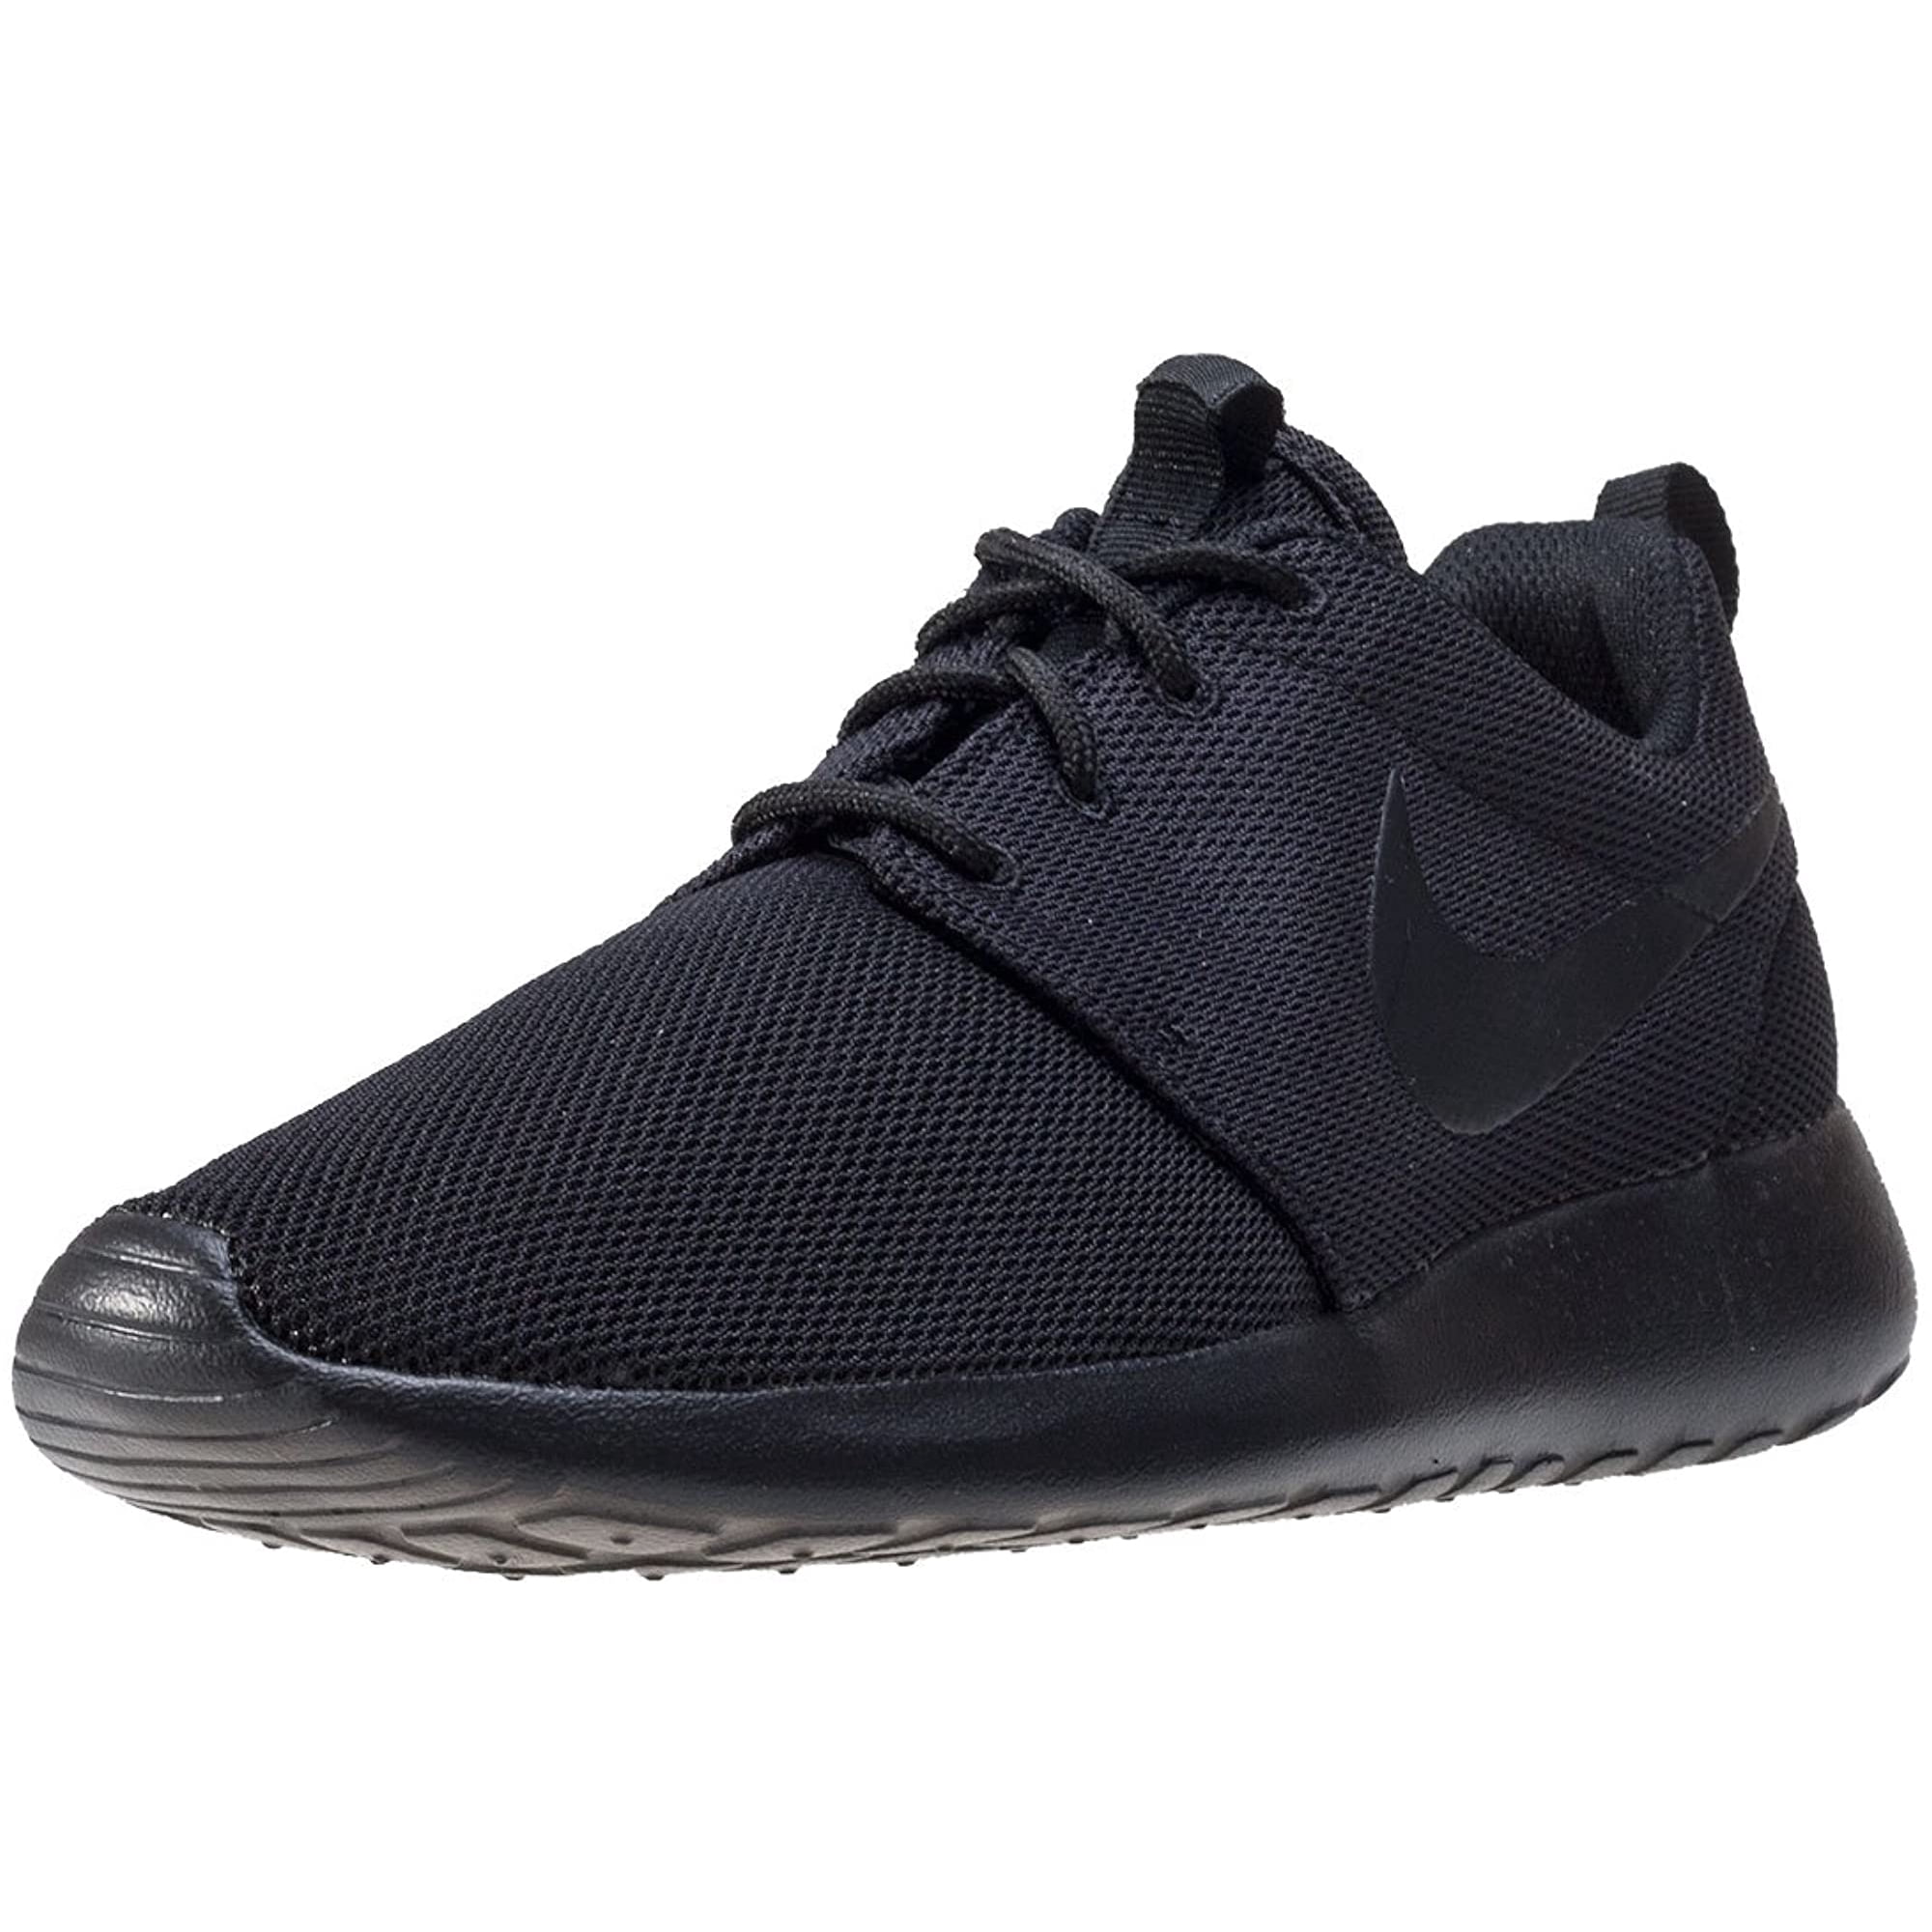 revista espina Comenzar Nike Womens Roshe One Running Shoes 5.5 BM US Black/Black/Dark Grey |  Walmart Canada